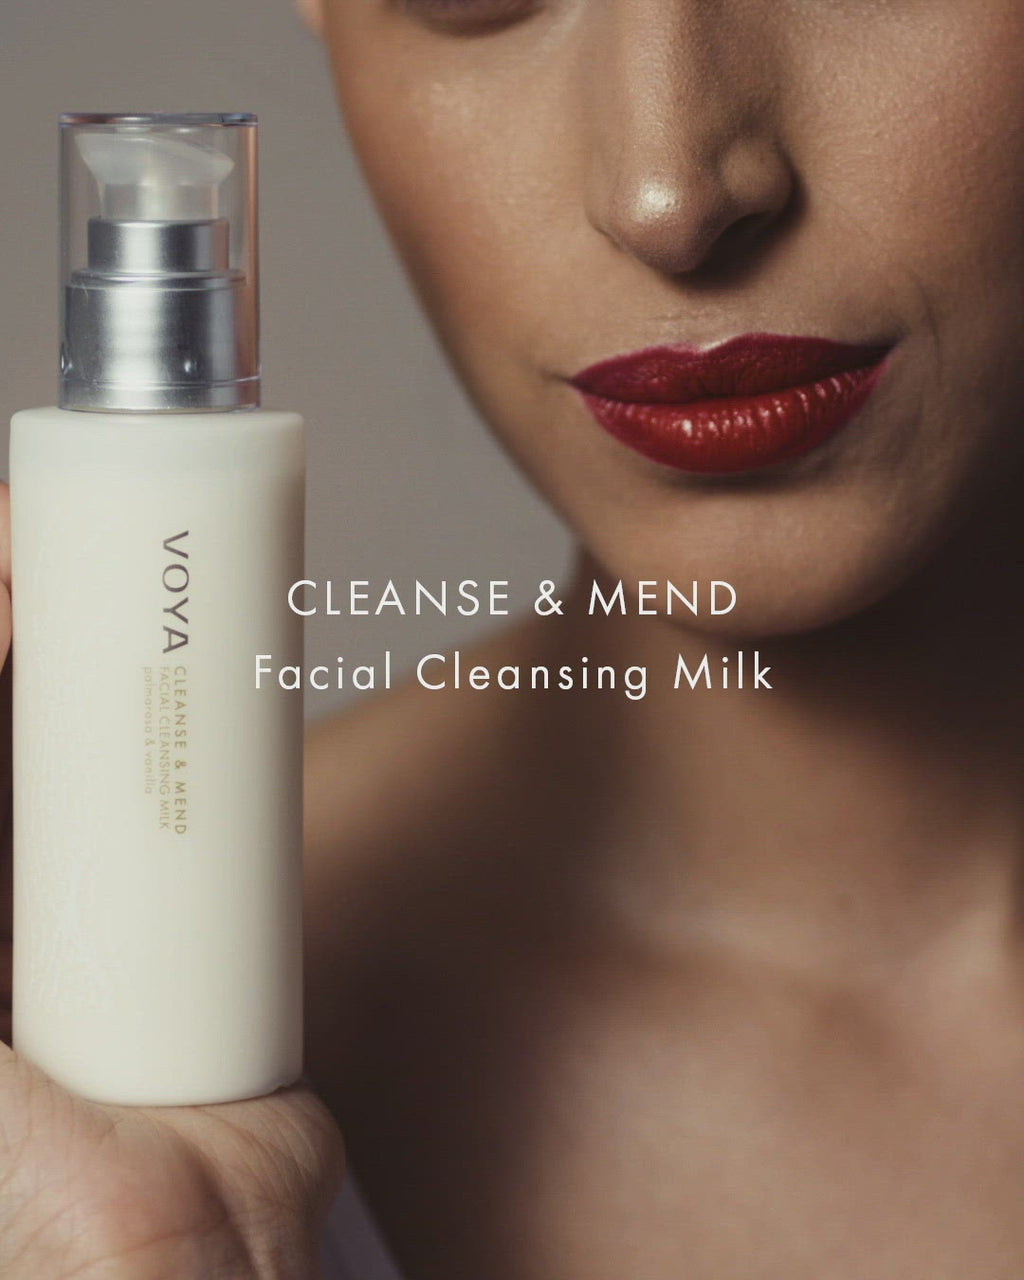 VOYA Cleanse & Mend Facial Cleansing Milk in use